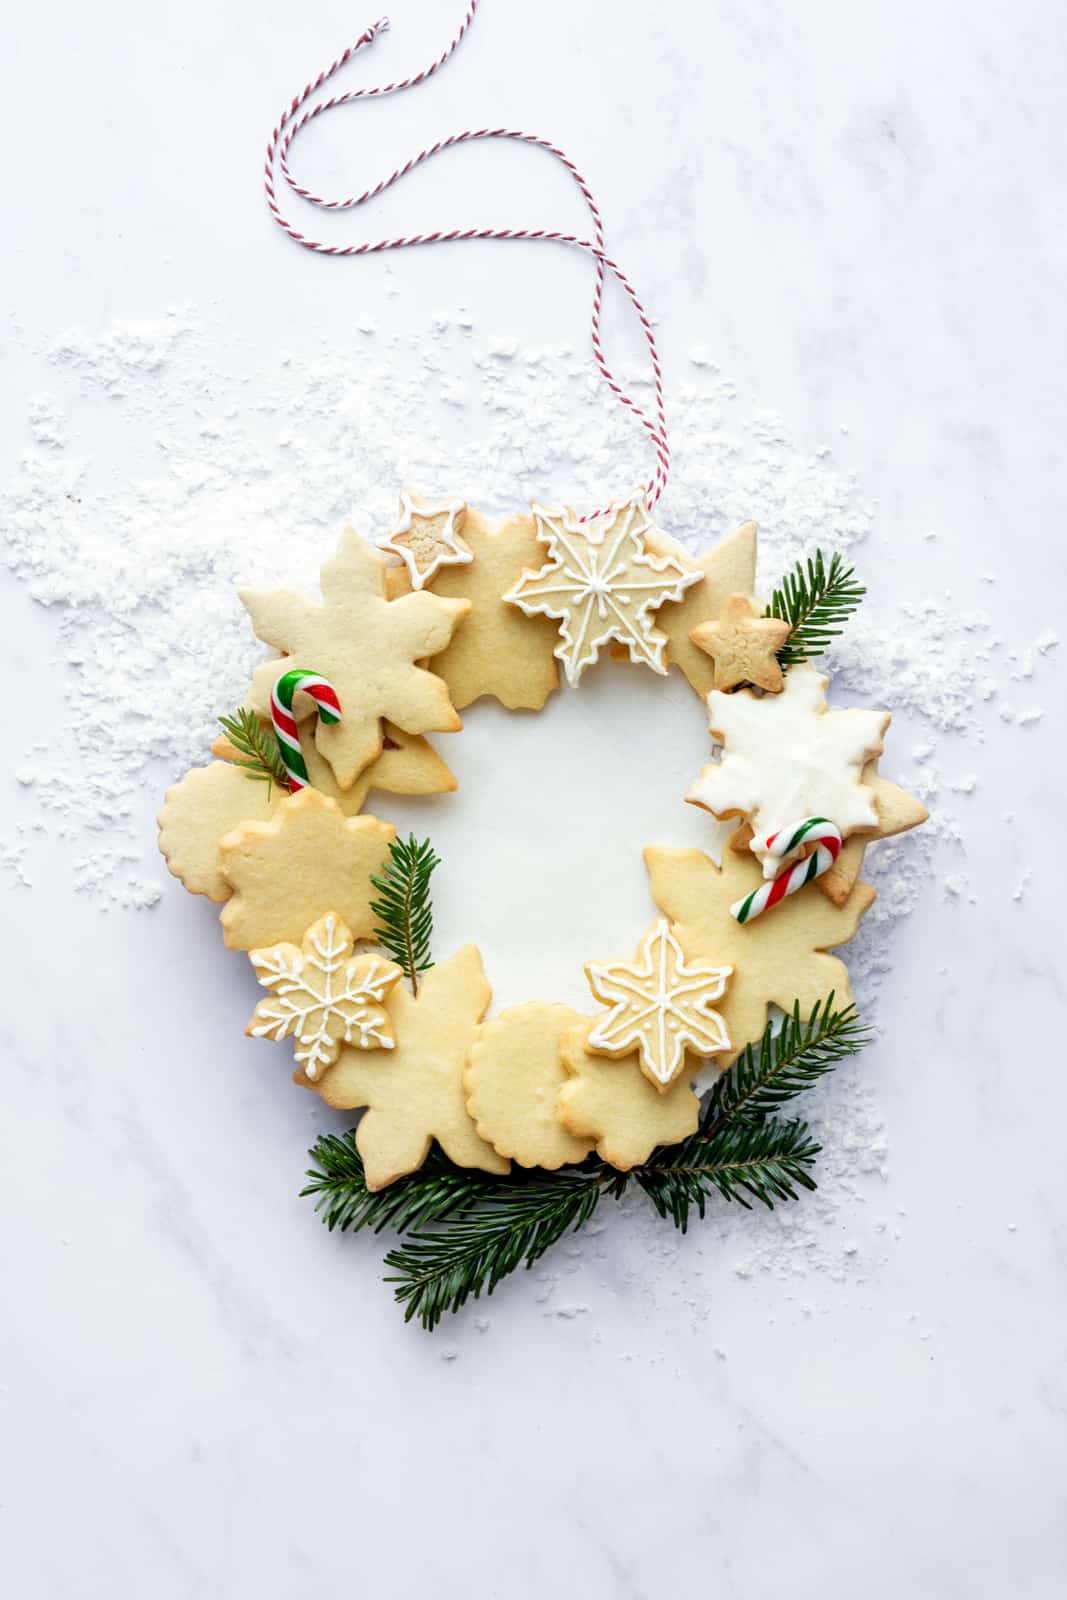 Cut out Christmas sugar cookies arranged in a wreath shape